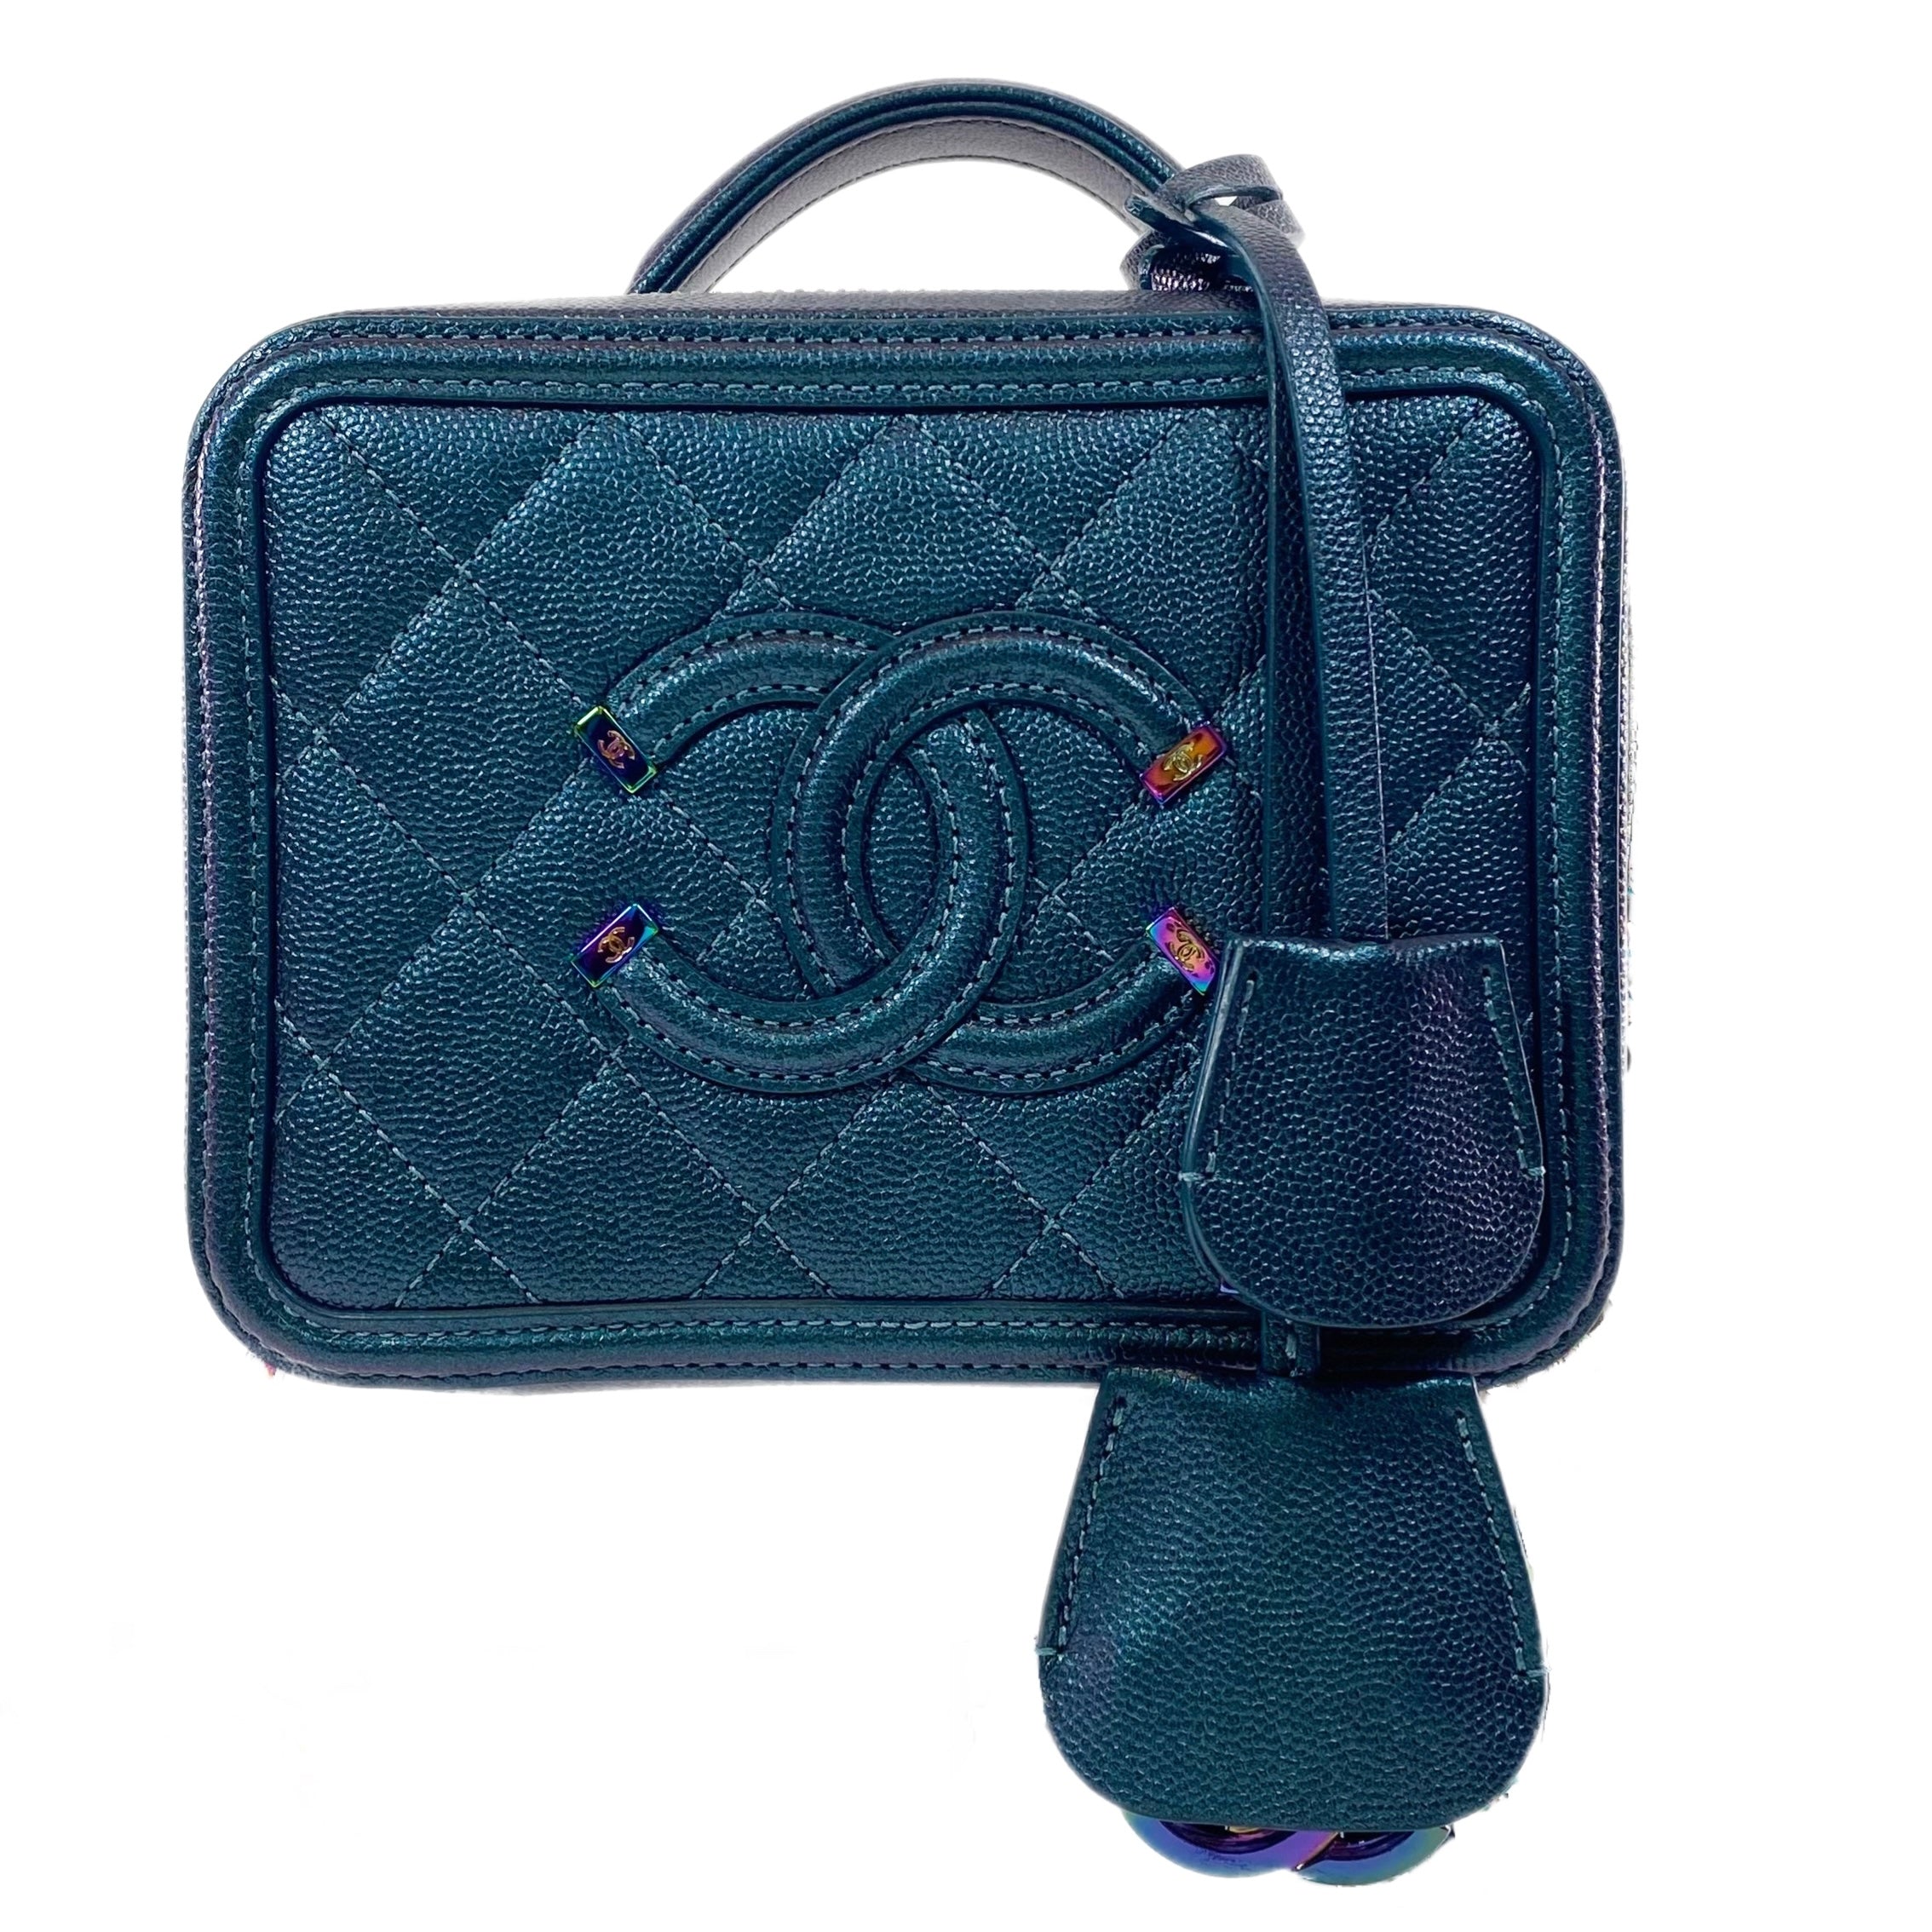 Chanel Iridescent Dark Turquoise Quilted Caviar Filigree Vanity Case